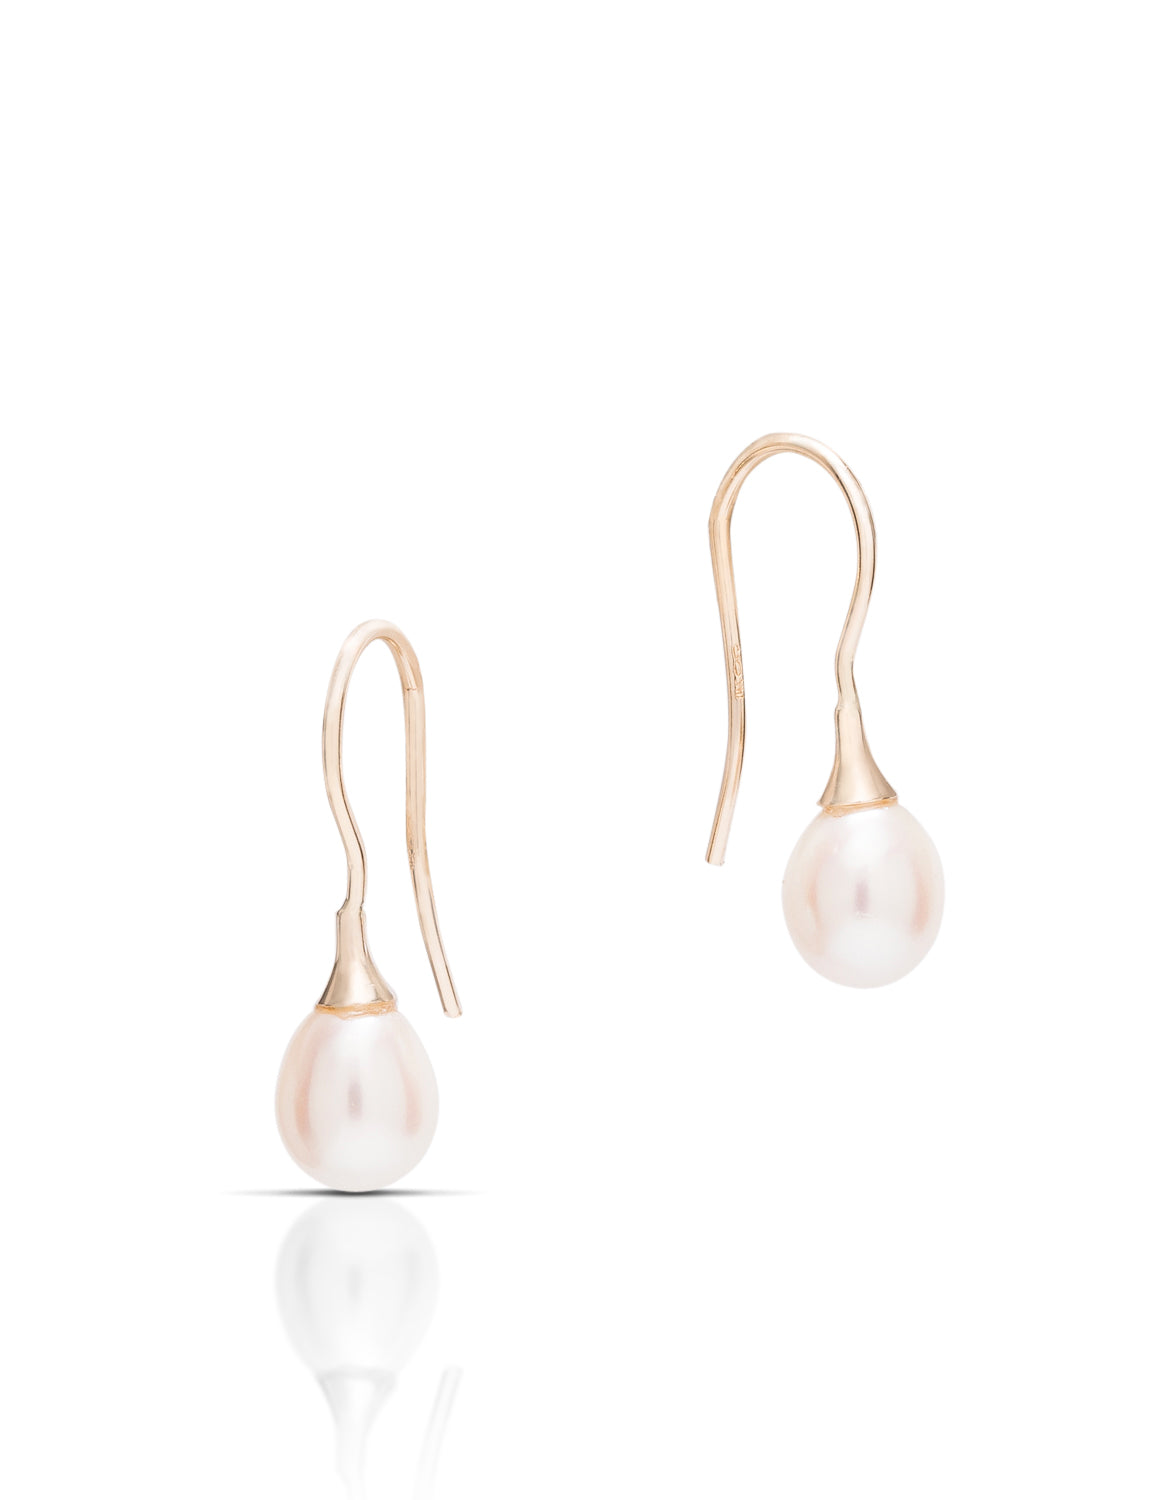 Pearl Drop Earring - Charles Koll Jewellers